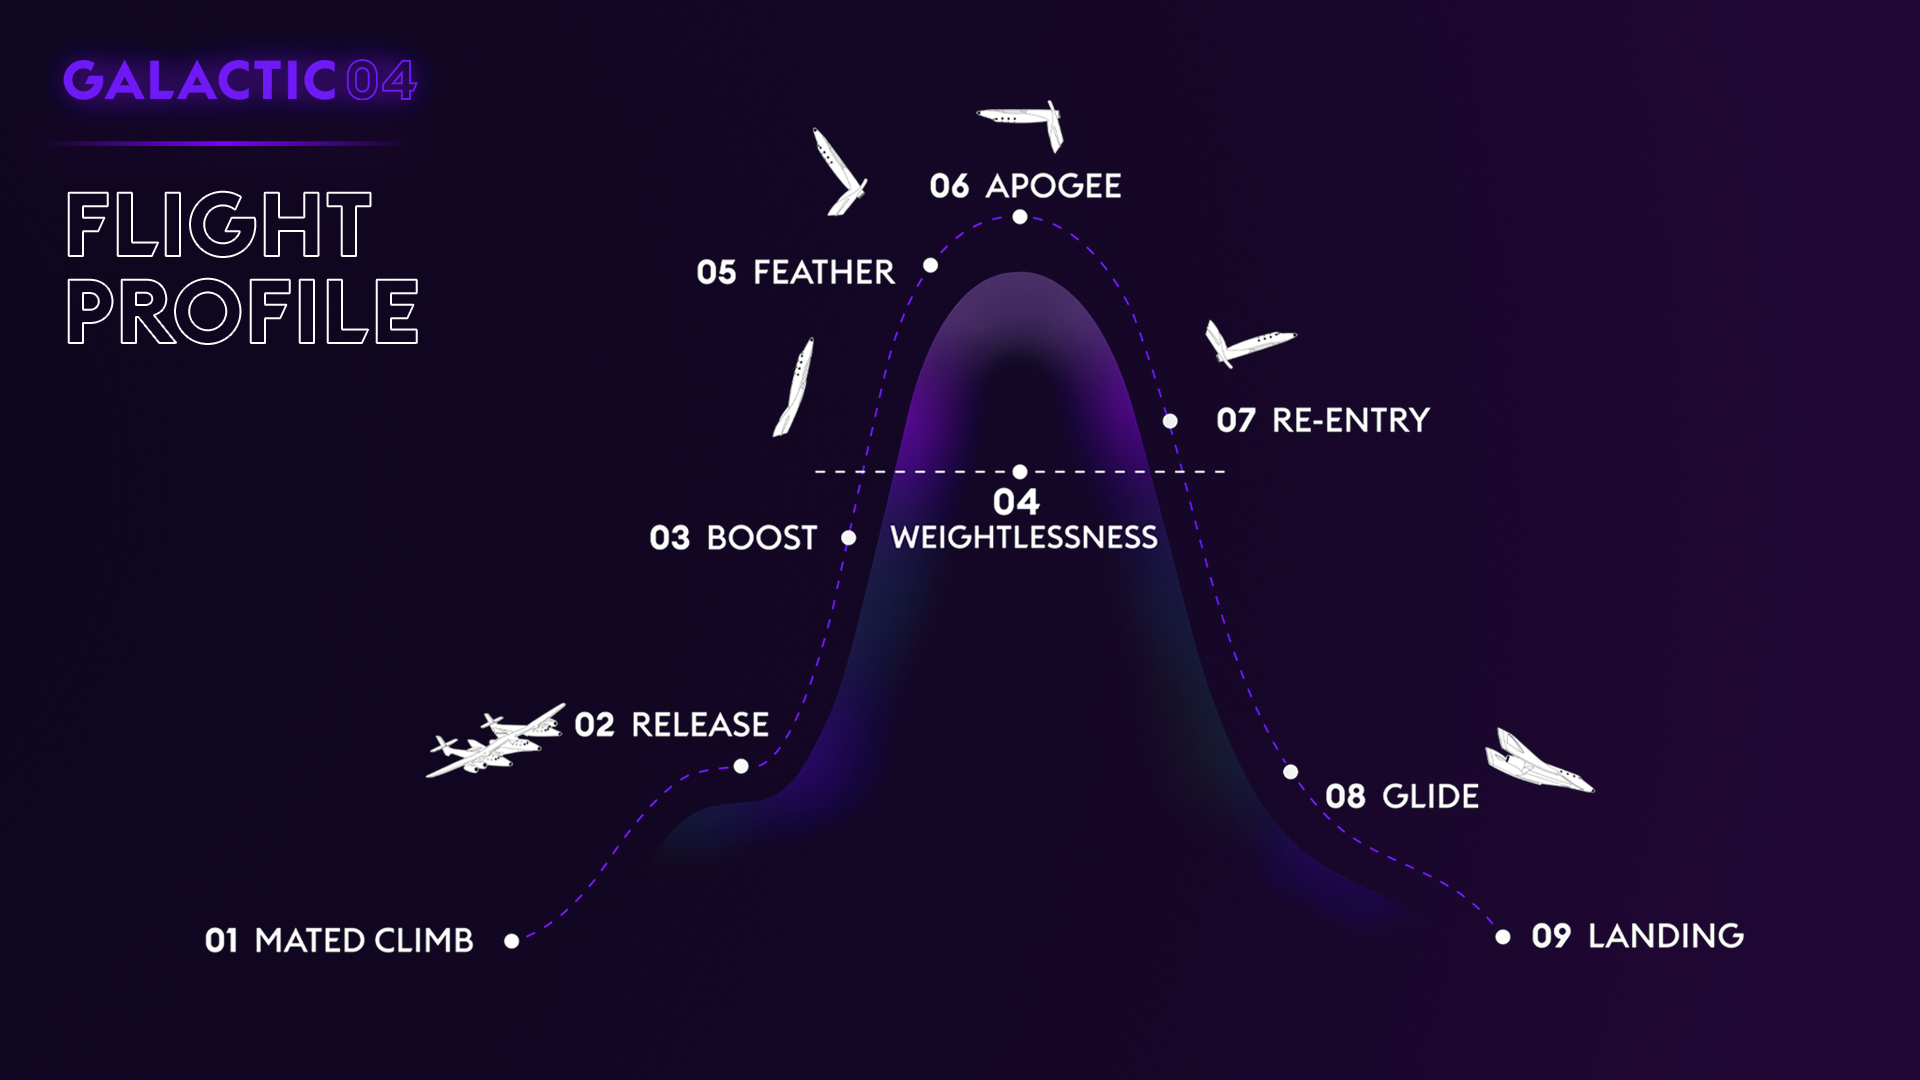 Virgin Galactic's Galactic 04 mission flight profile